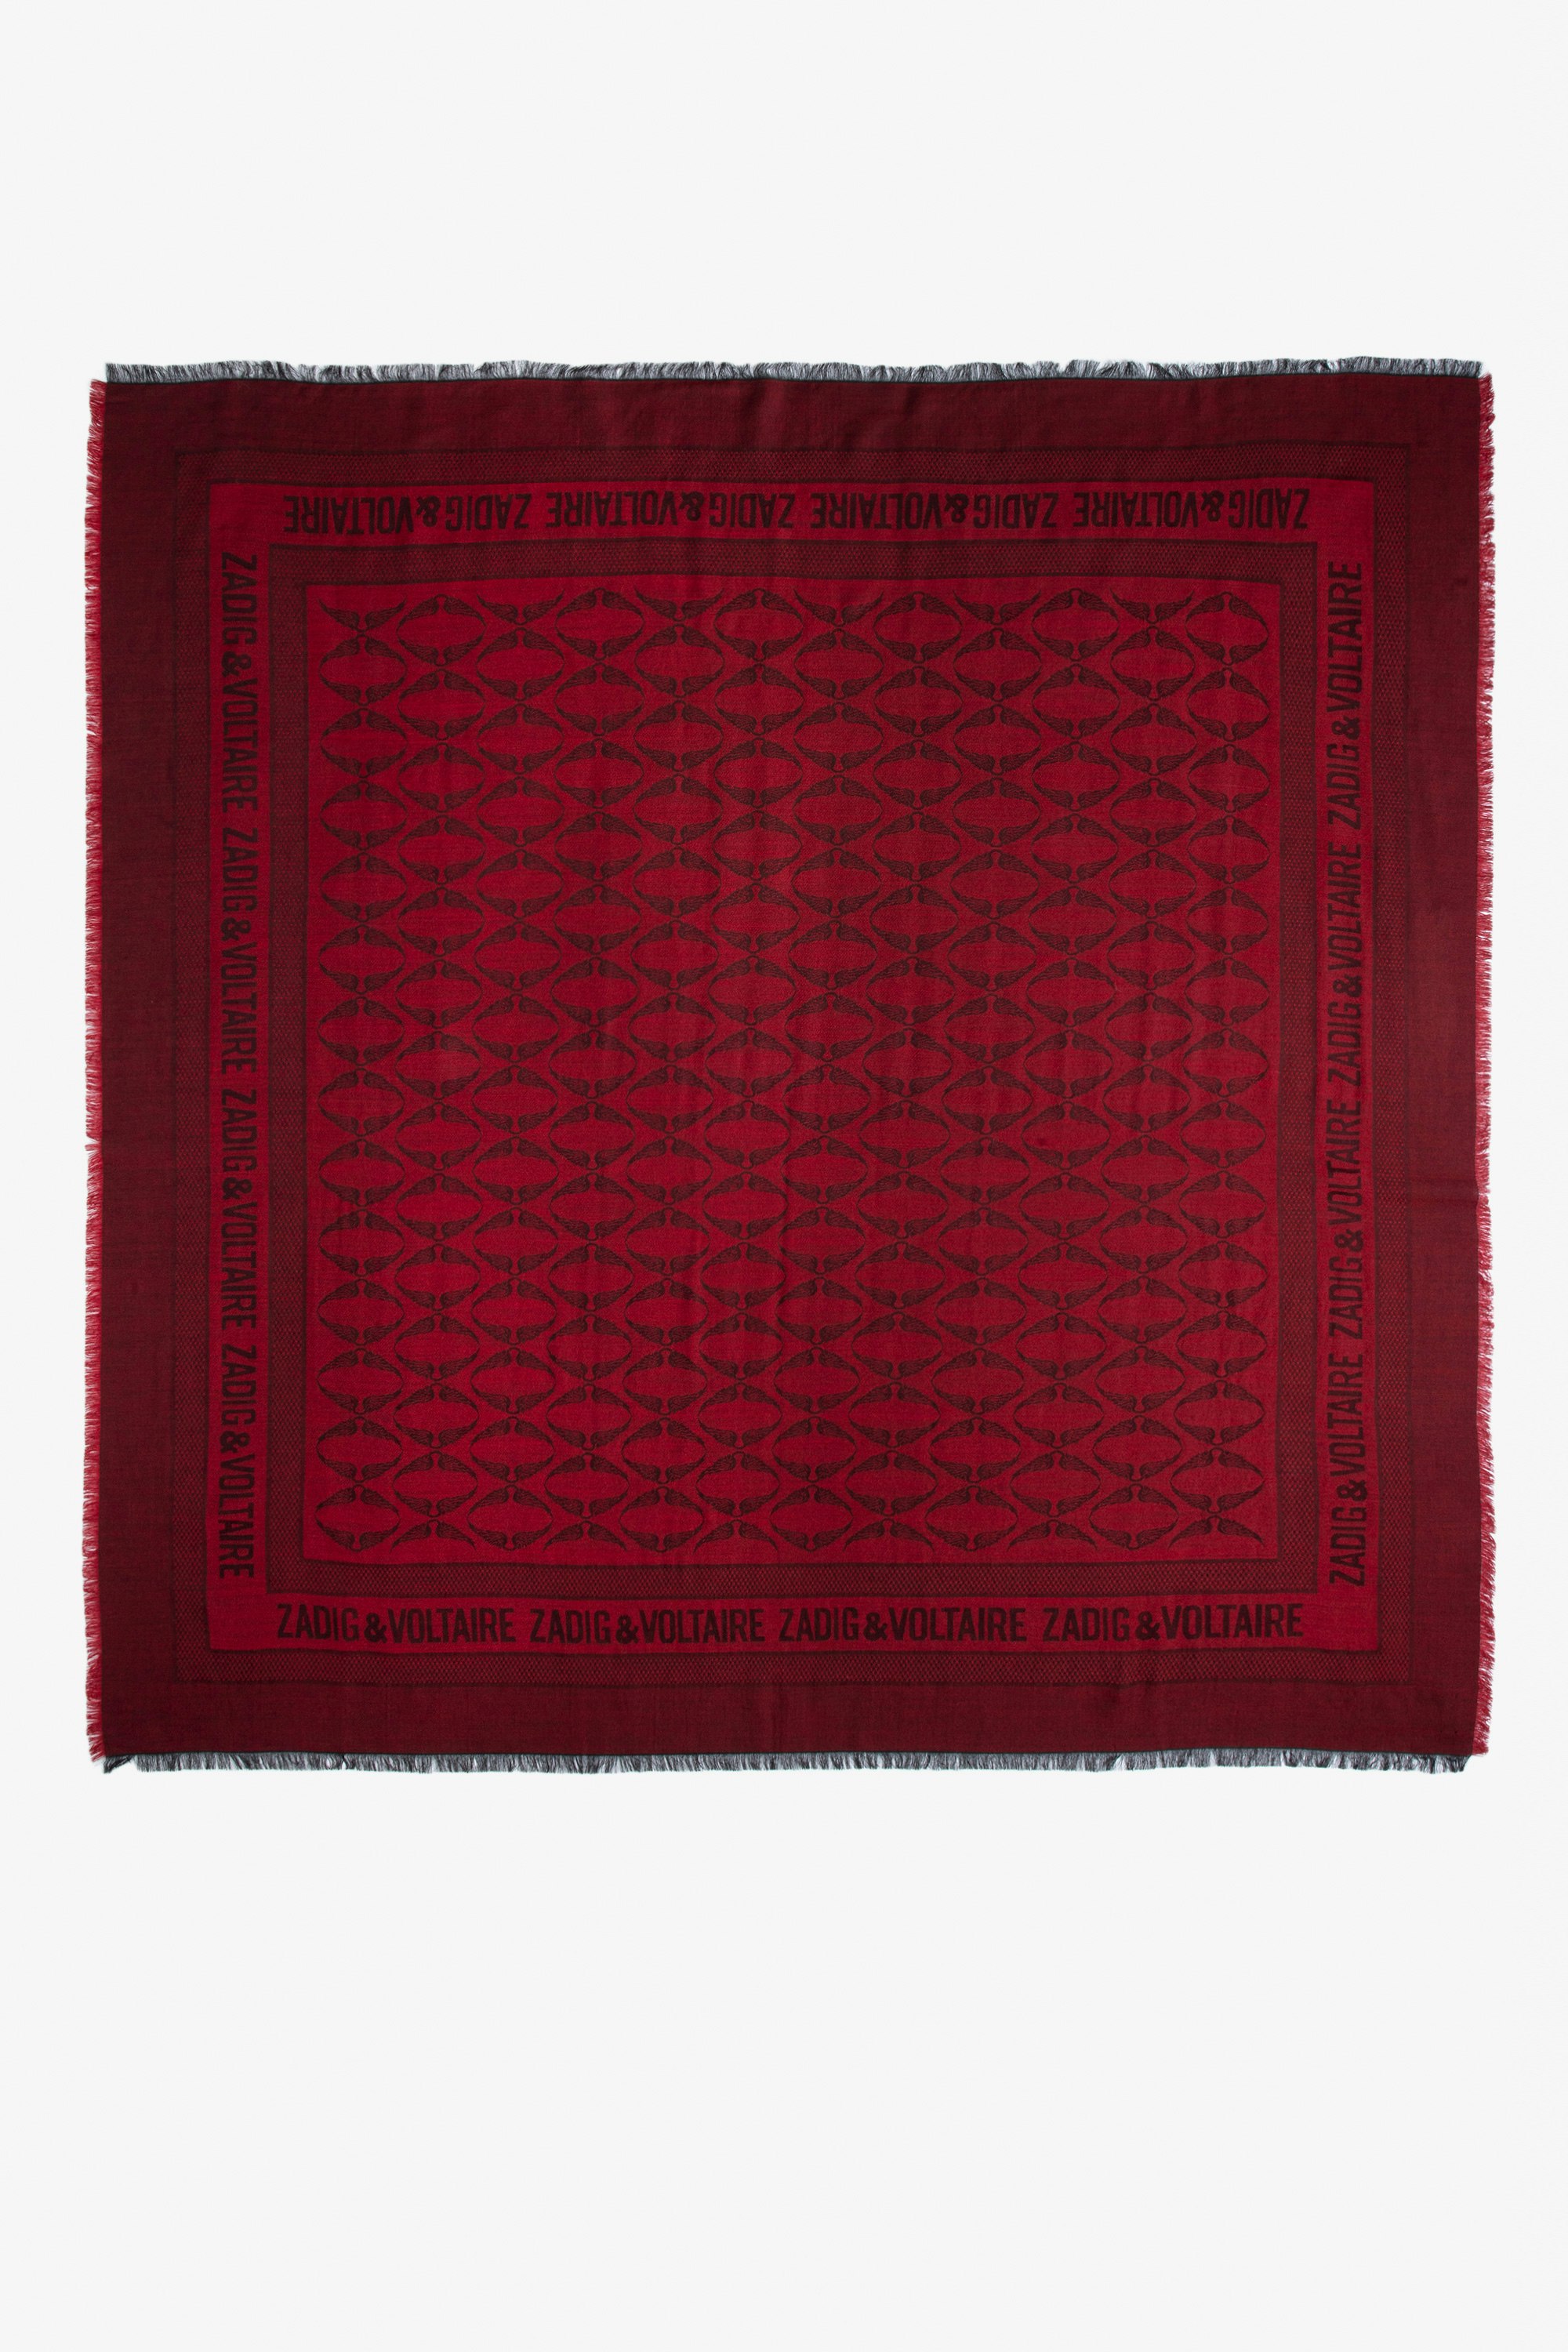 Glenn Scarf Women’s red rectangular jacquard scarf.